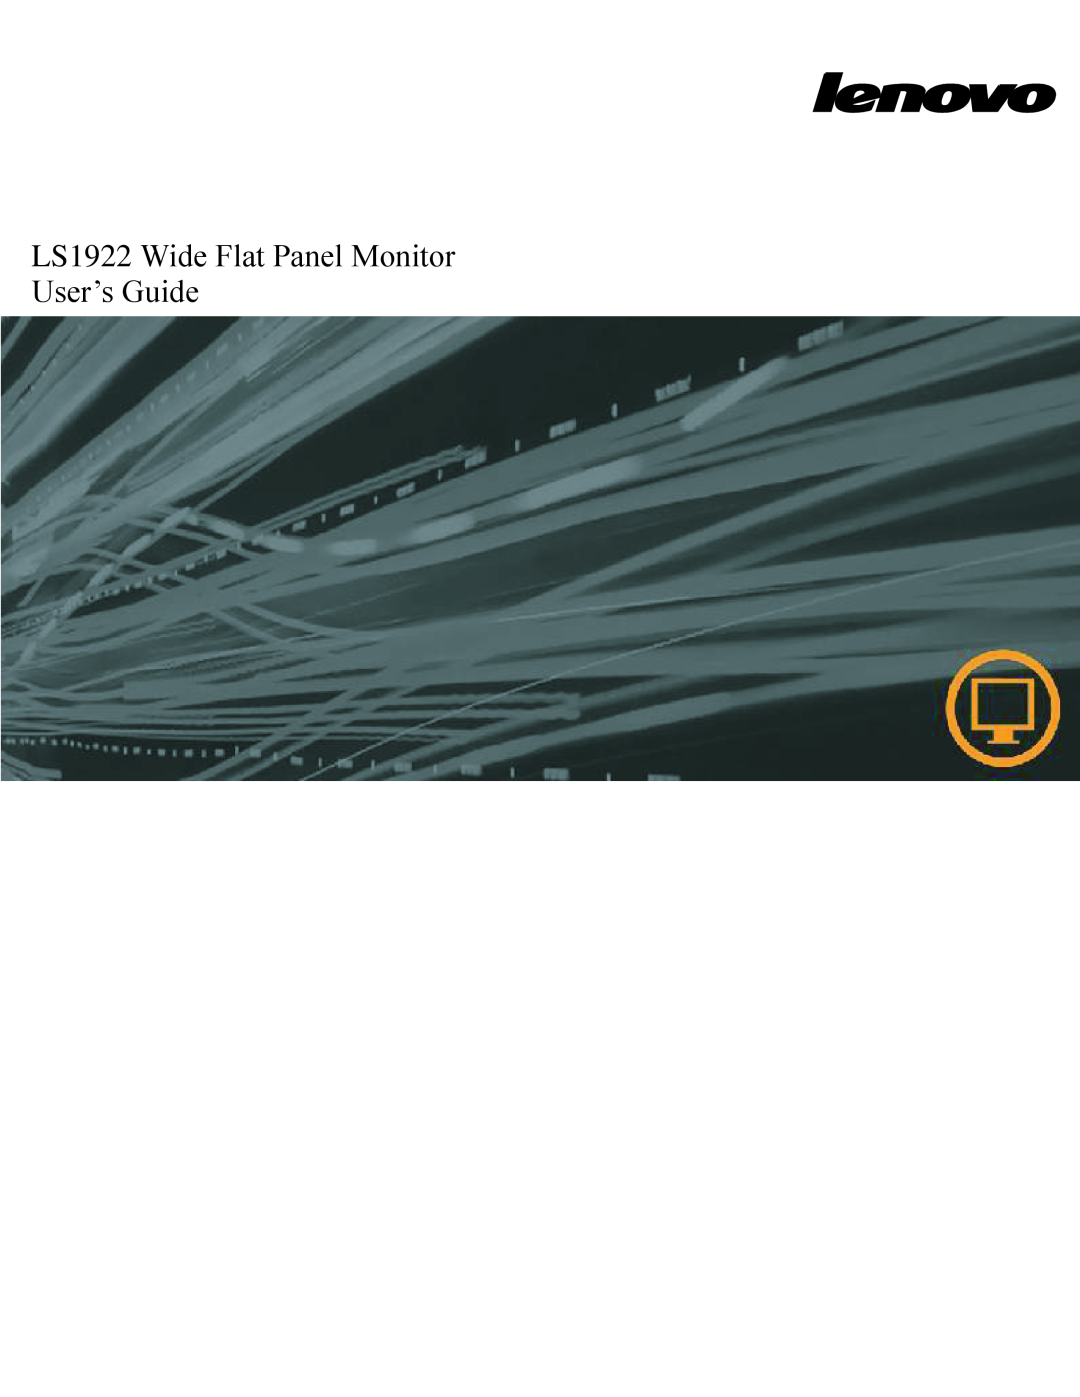 Lenovo 2580AF1 manual LS1922 Wide Flat Panel Monitor User’s Guide 